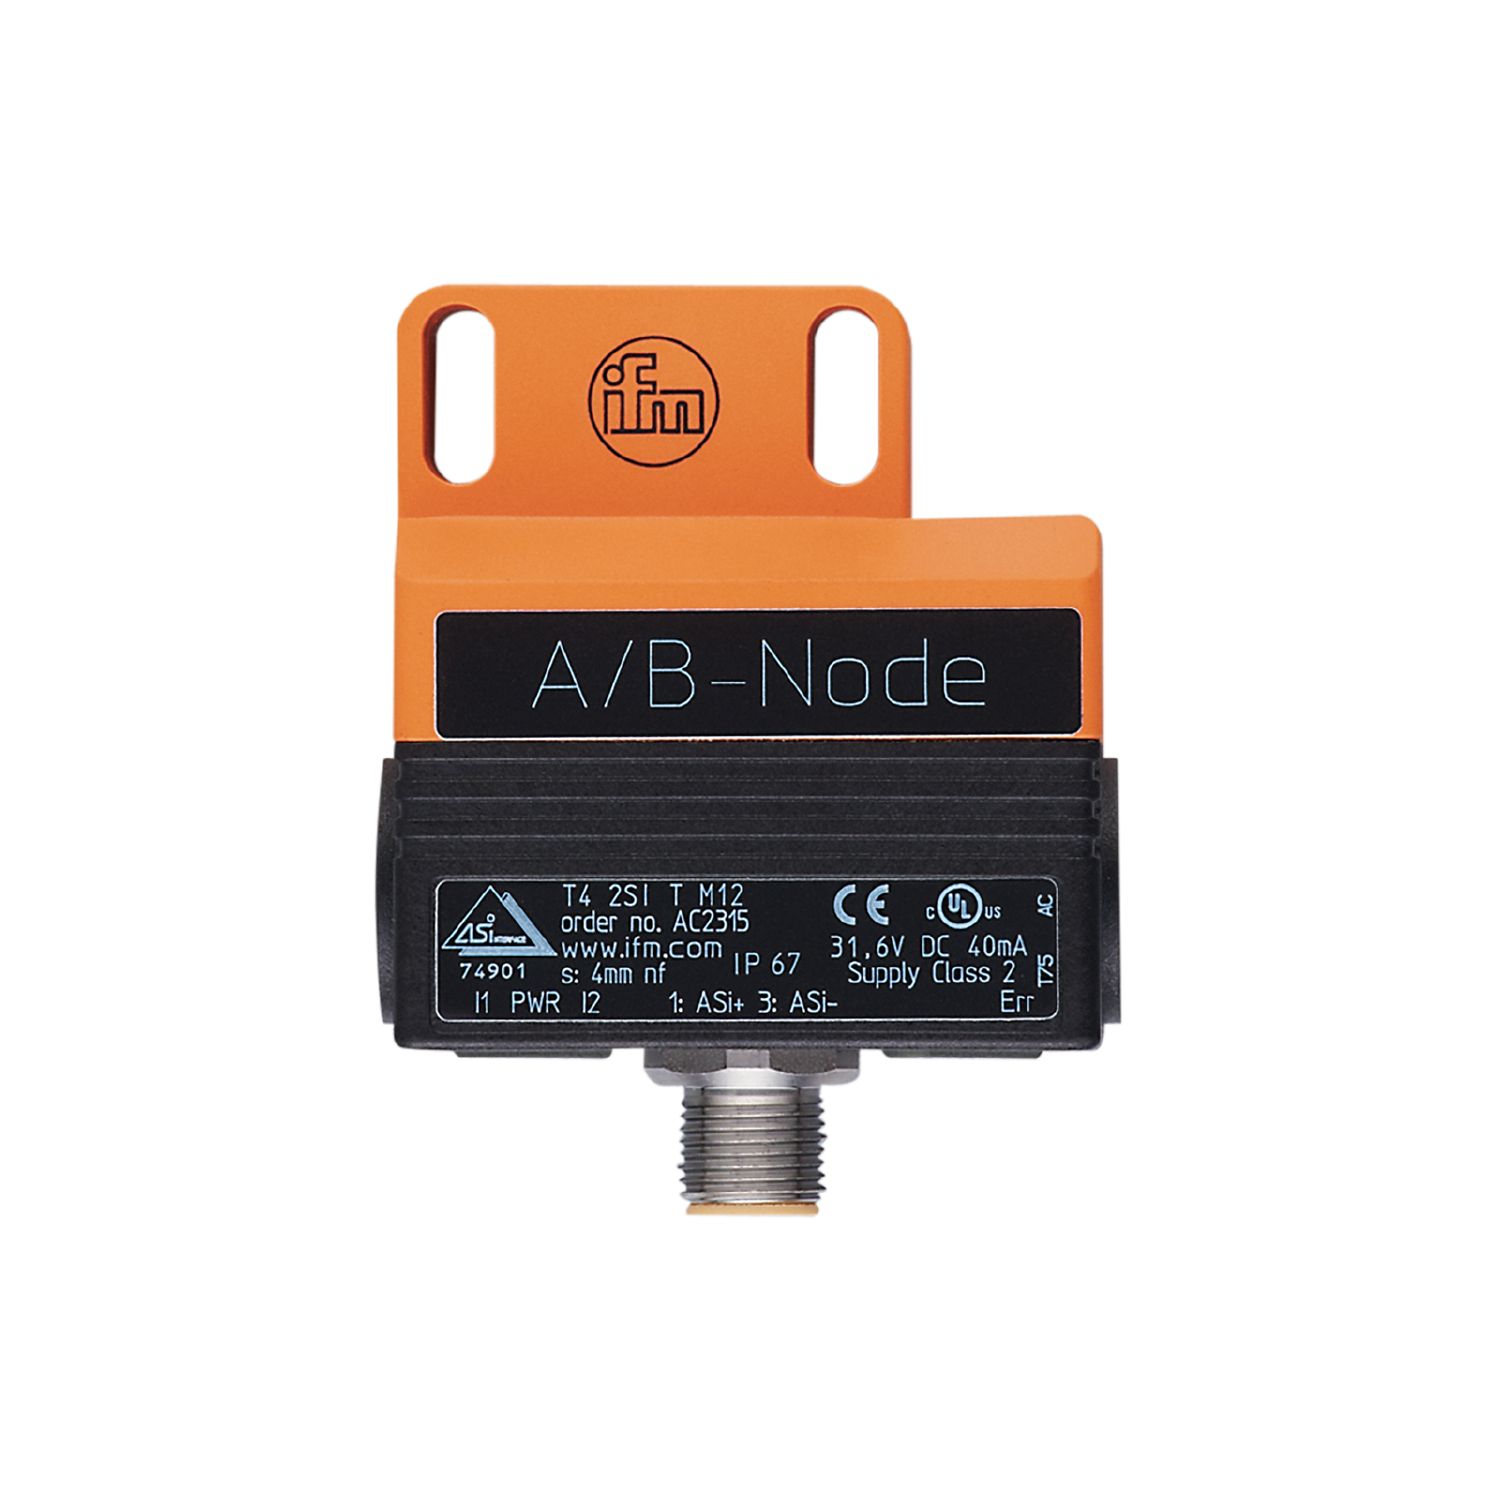 AC2315 - AS-Interface dual sensor for pneumatic valve actuators - ifm